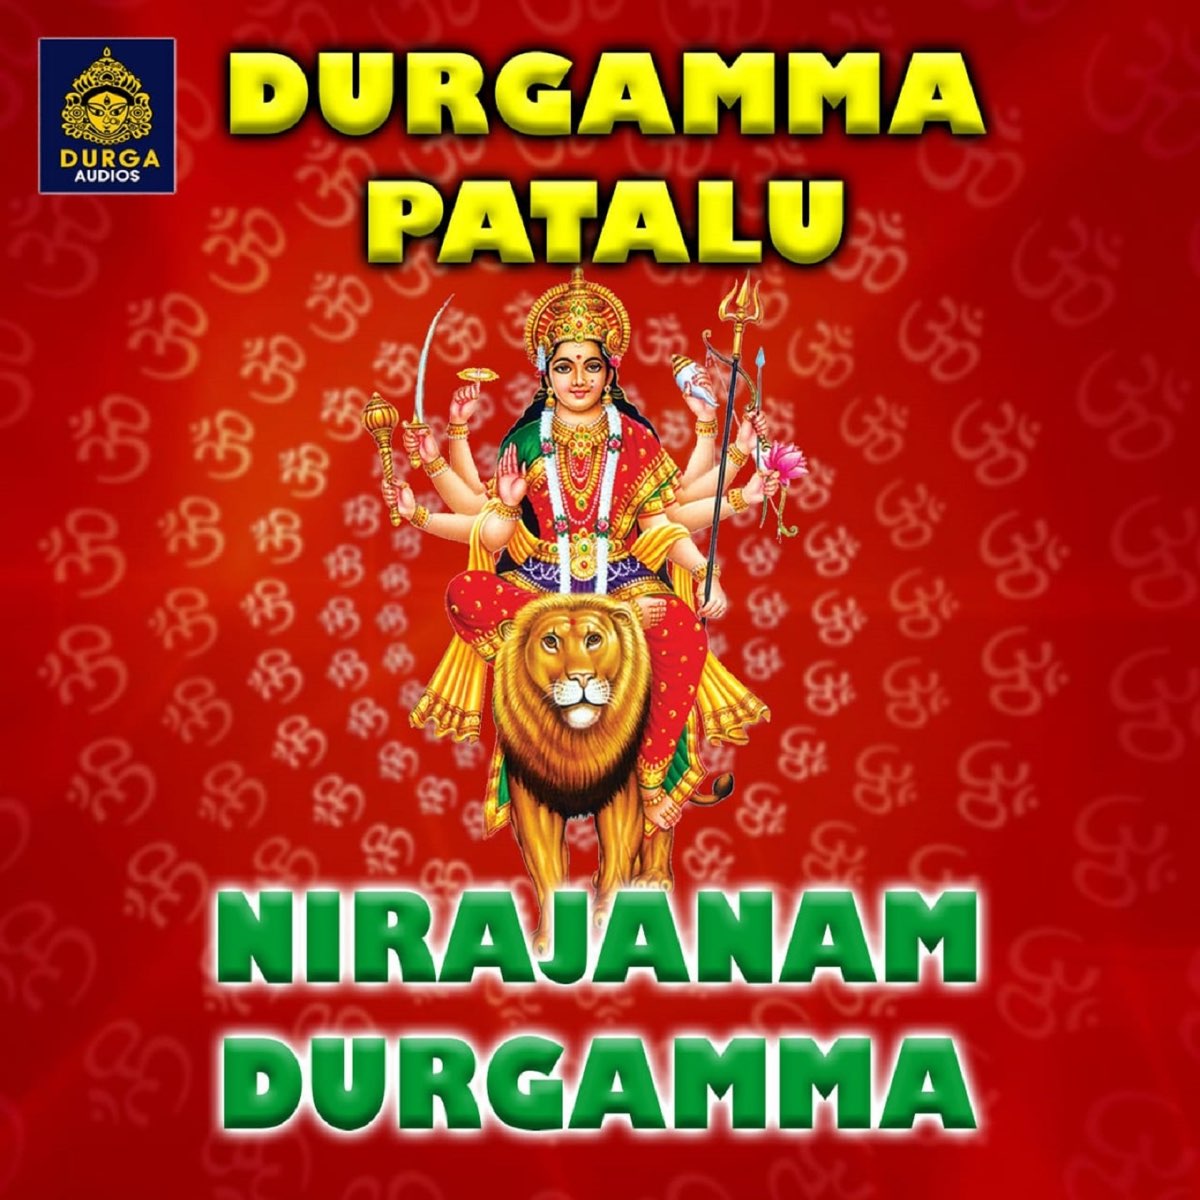 Nirajanam Durgamma - Single by Usha Raj on Apple Music